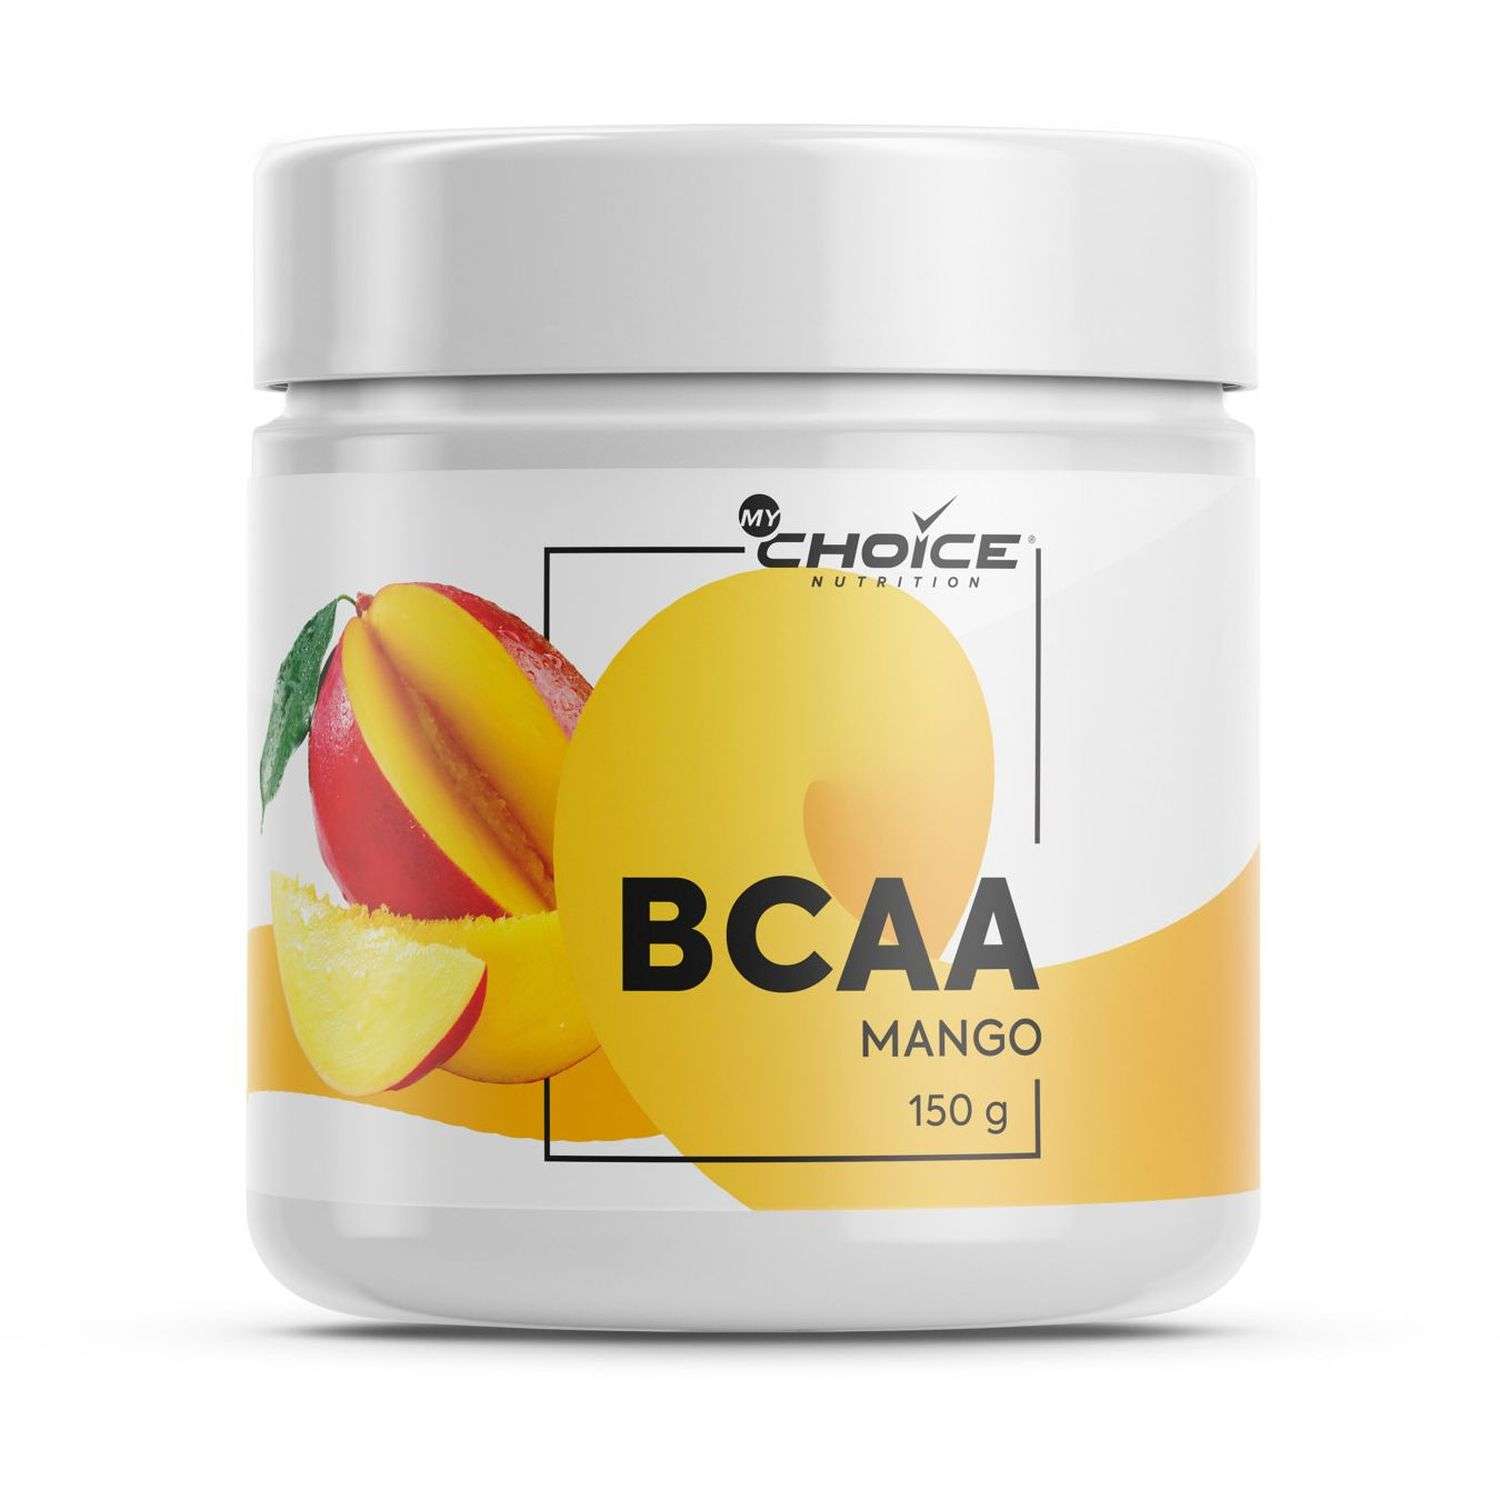 Напиток растворимый MyChoice Nutrition BCAA манго 150г - фото 1